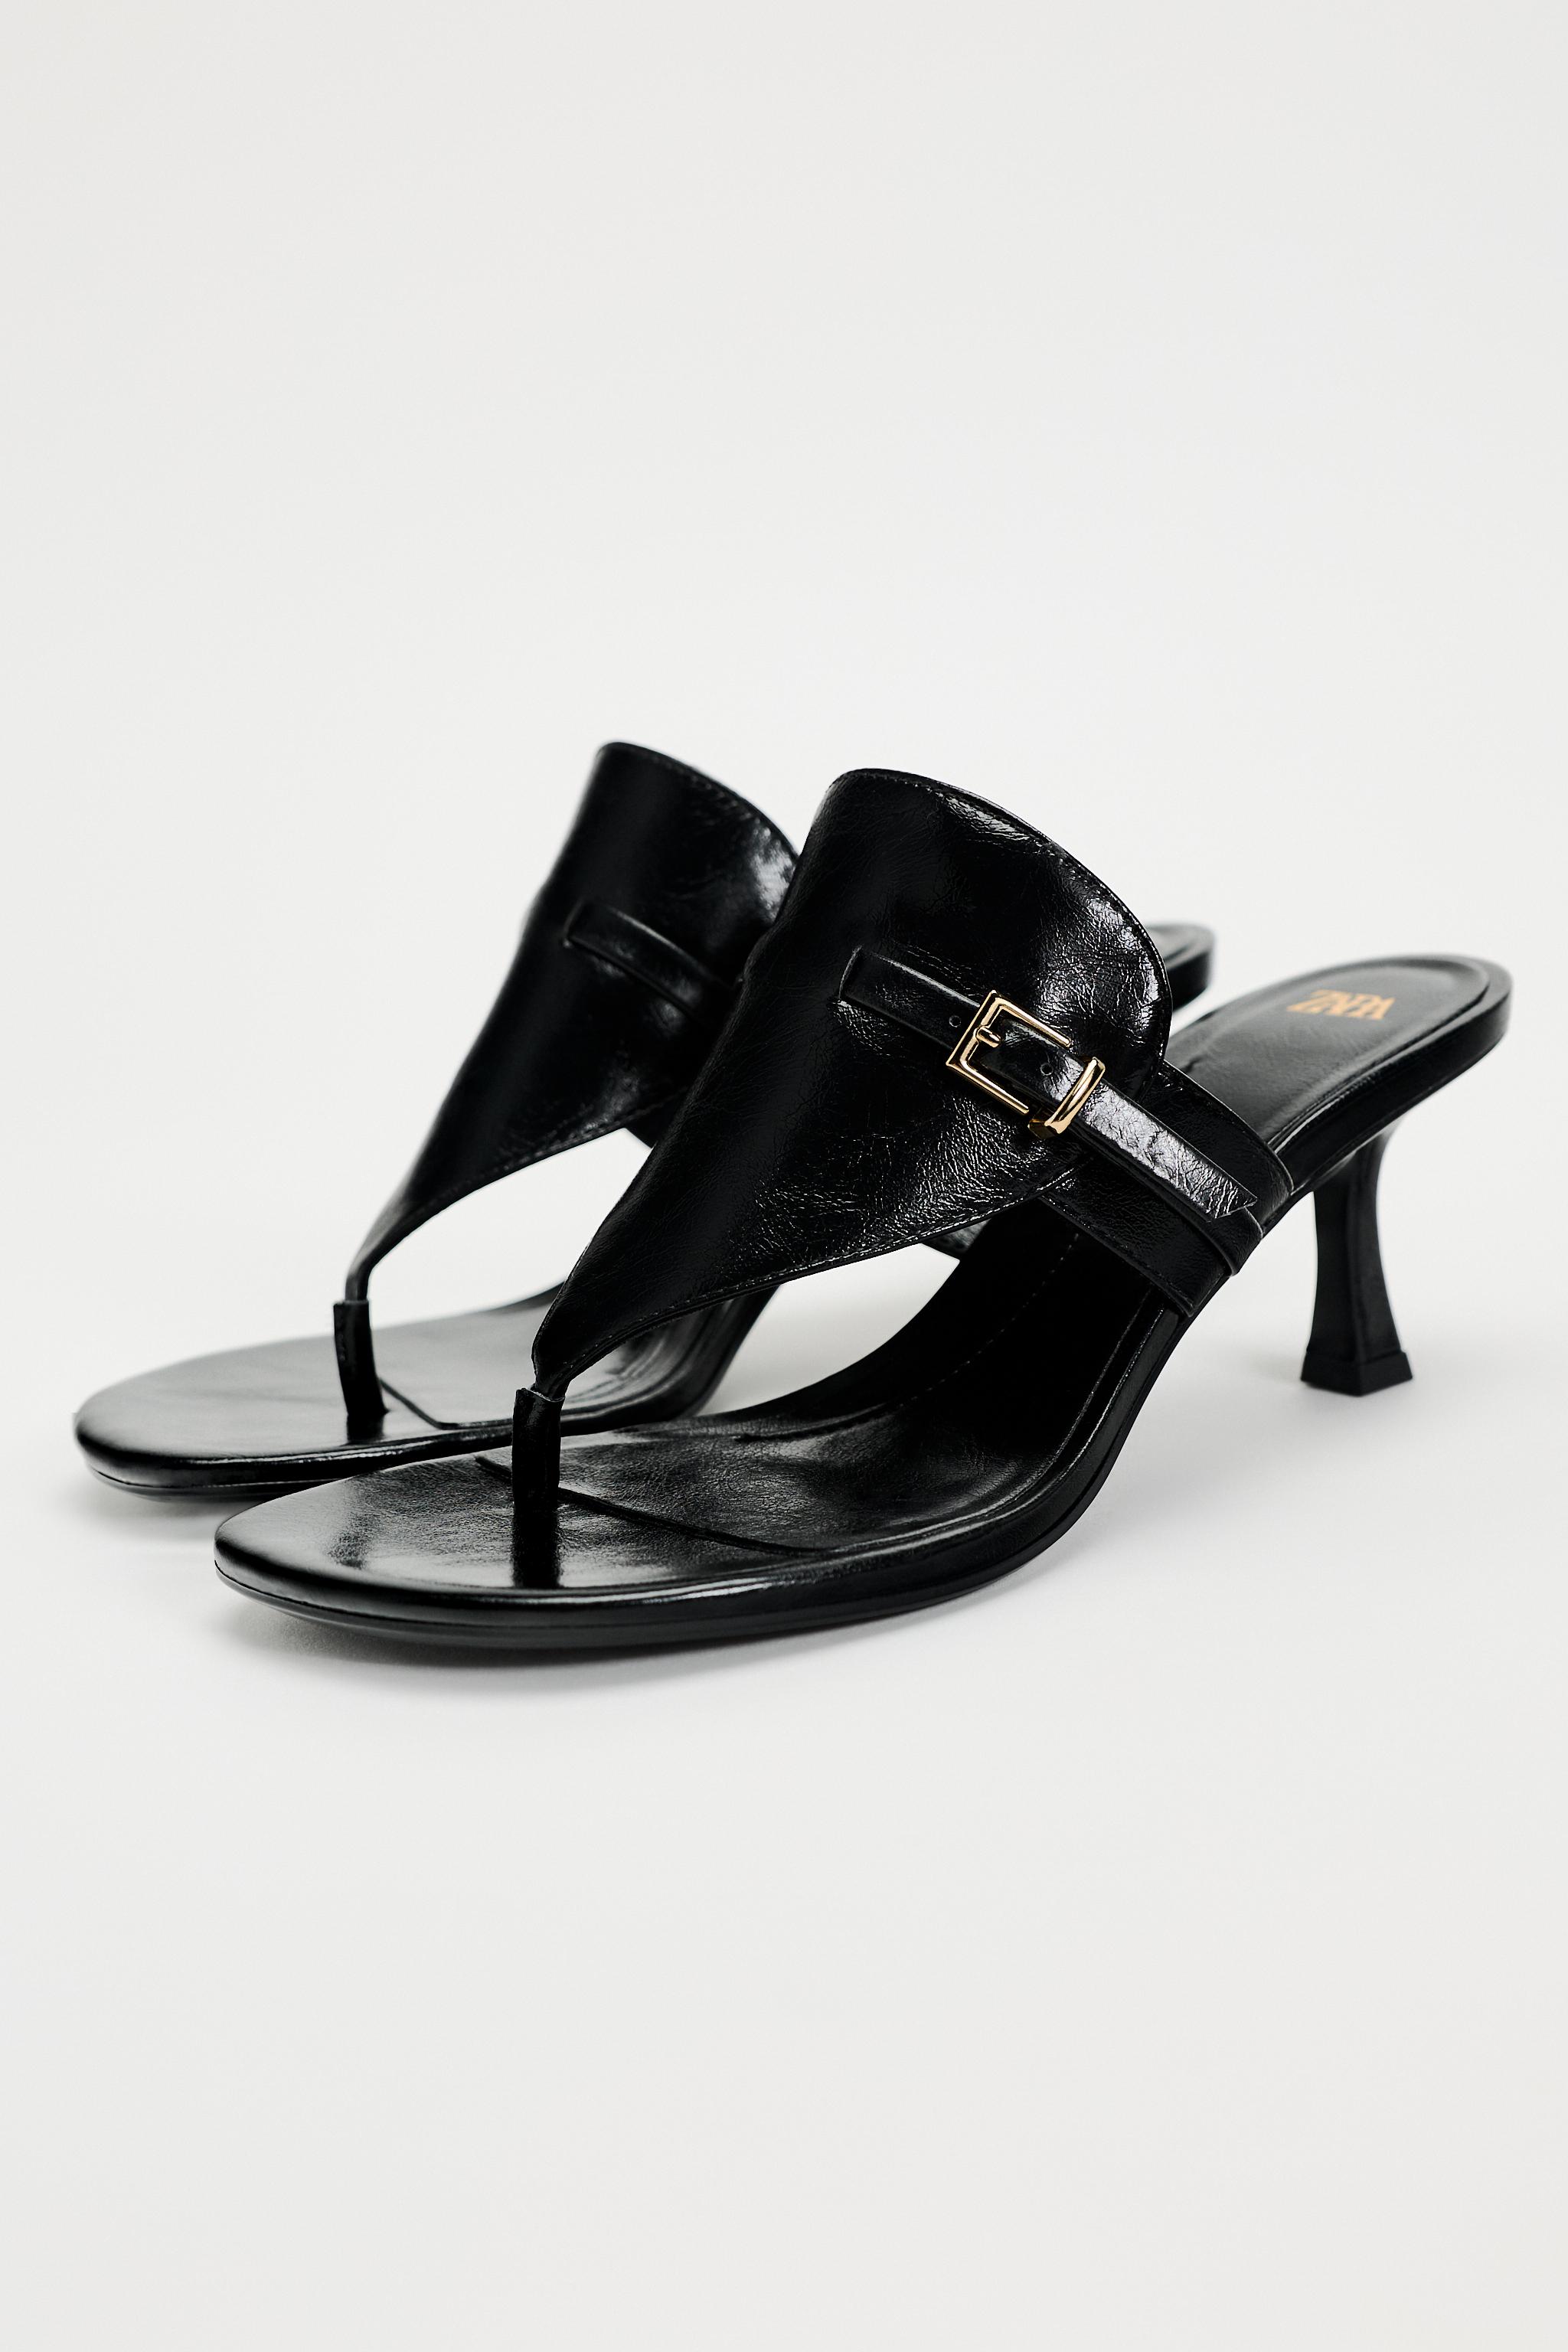 Black Patent Sandals - Kitten Heel Sandals - Black Thong Sandals